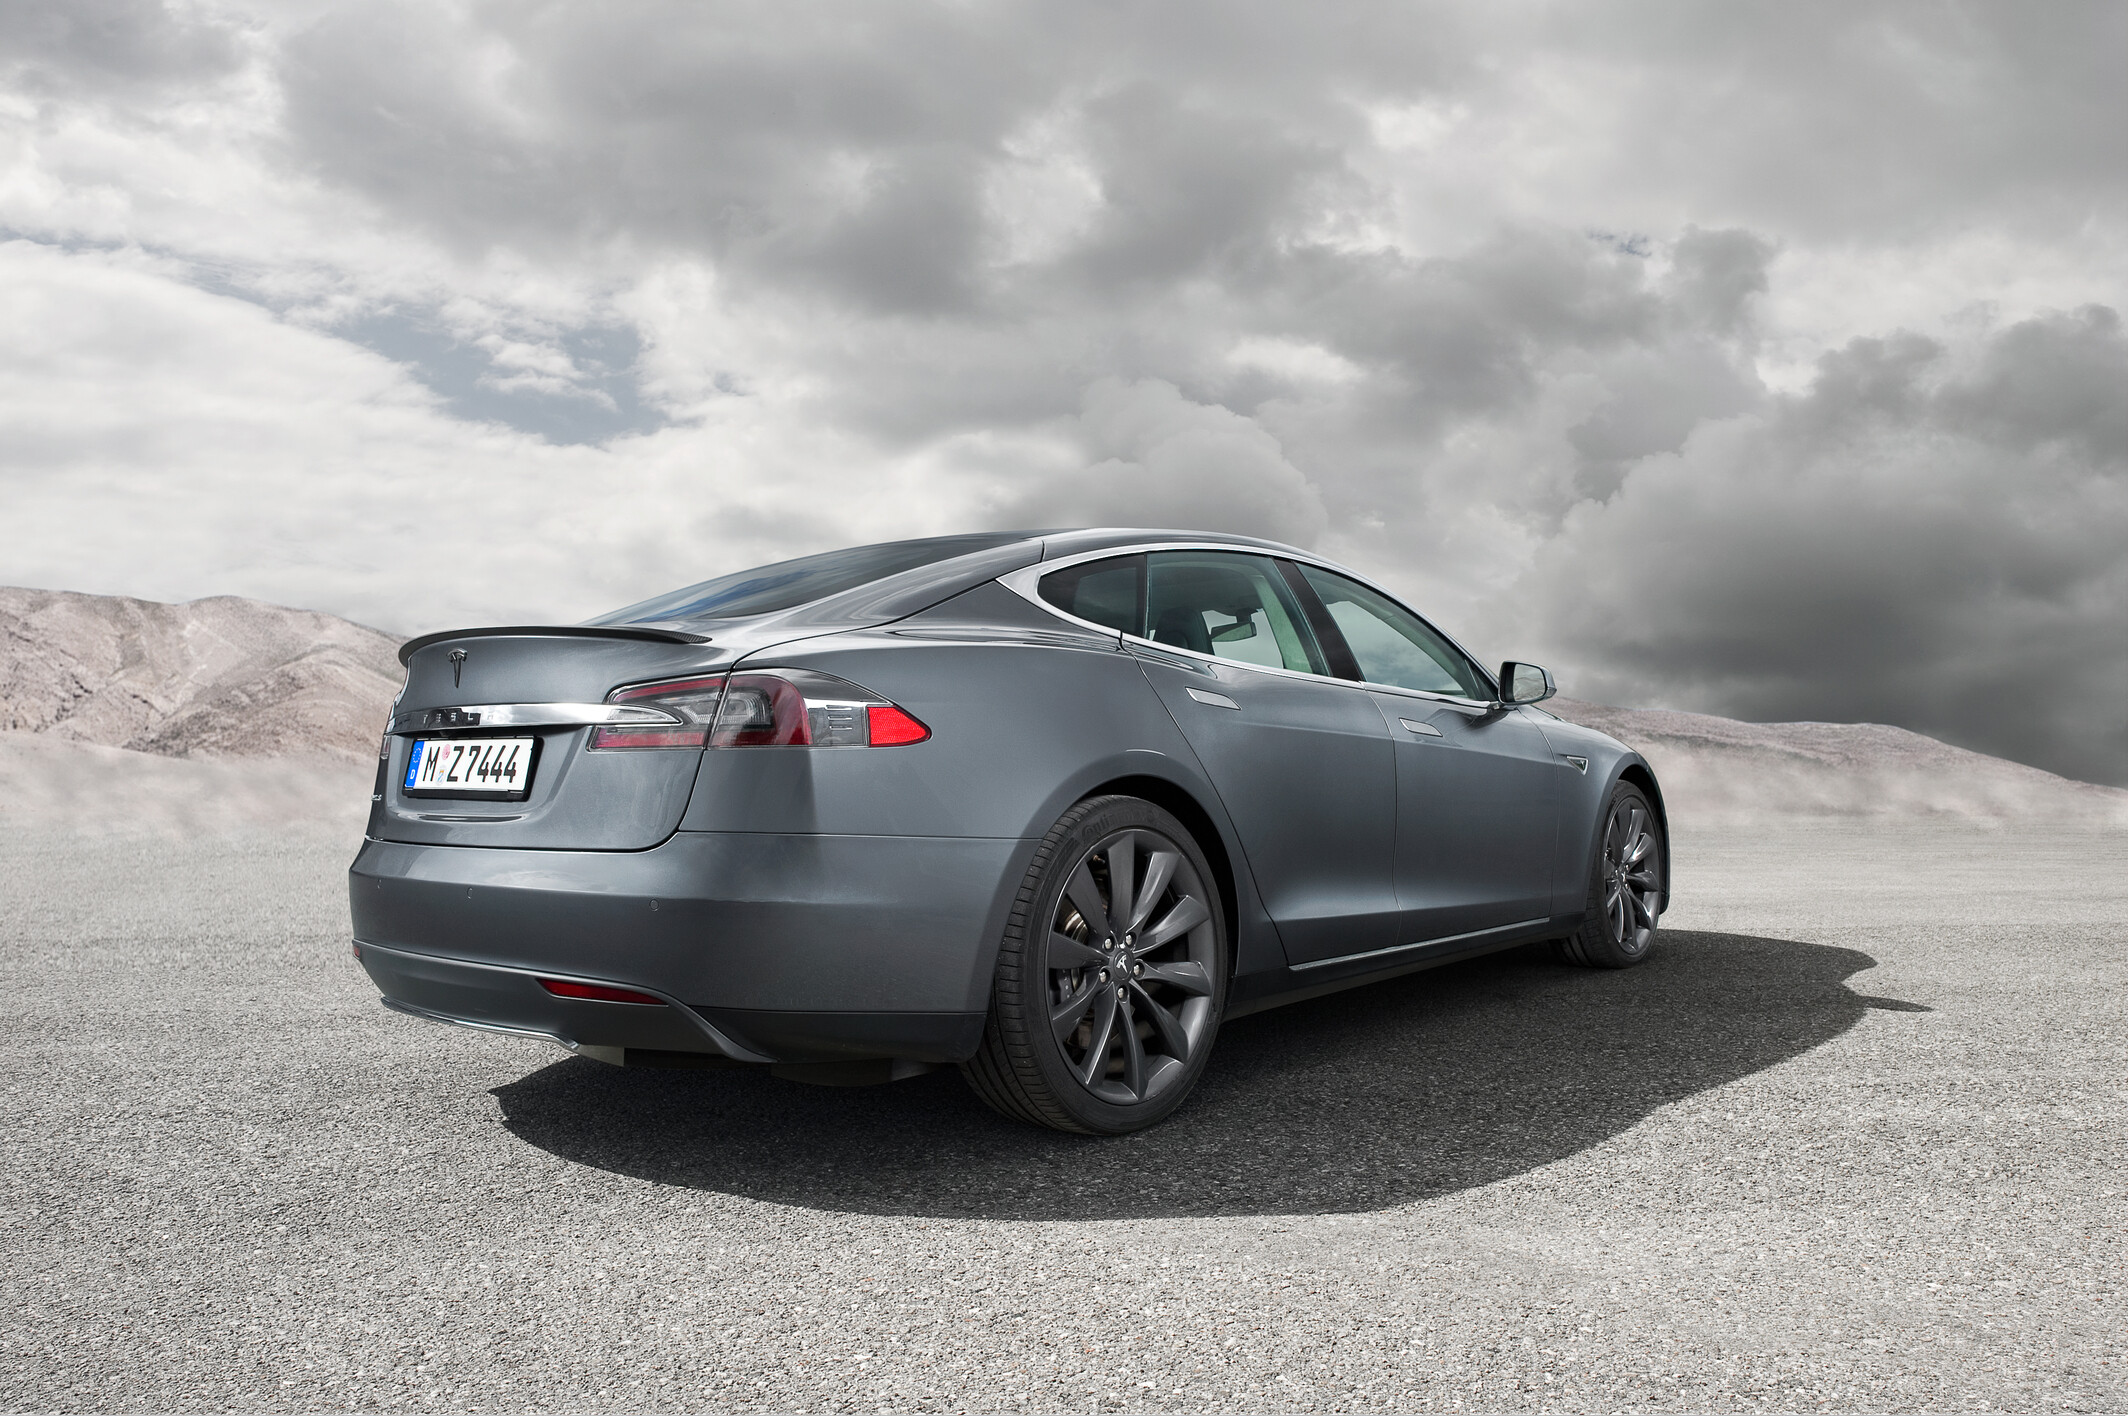 Tesla Model S: The top-selling electric vehicle brand in the U.S., Elon Musk, EV, Autopilot. 2130x1420 HD Wallpaper.